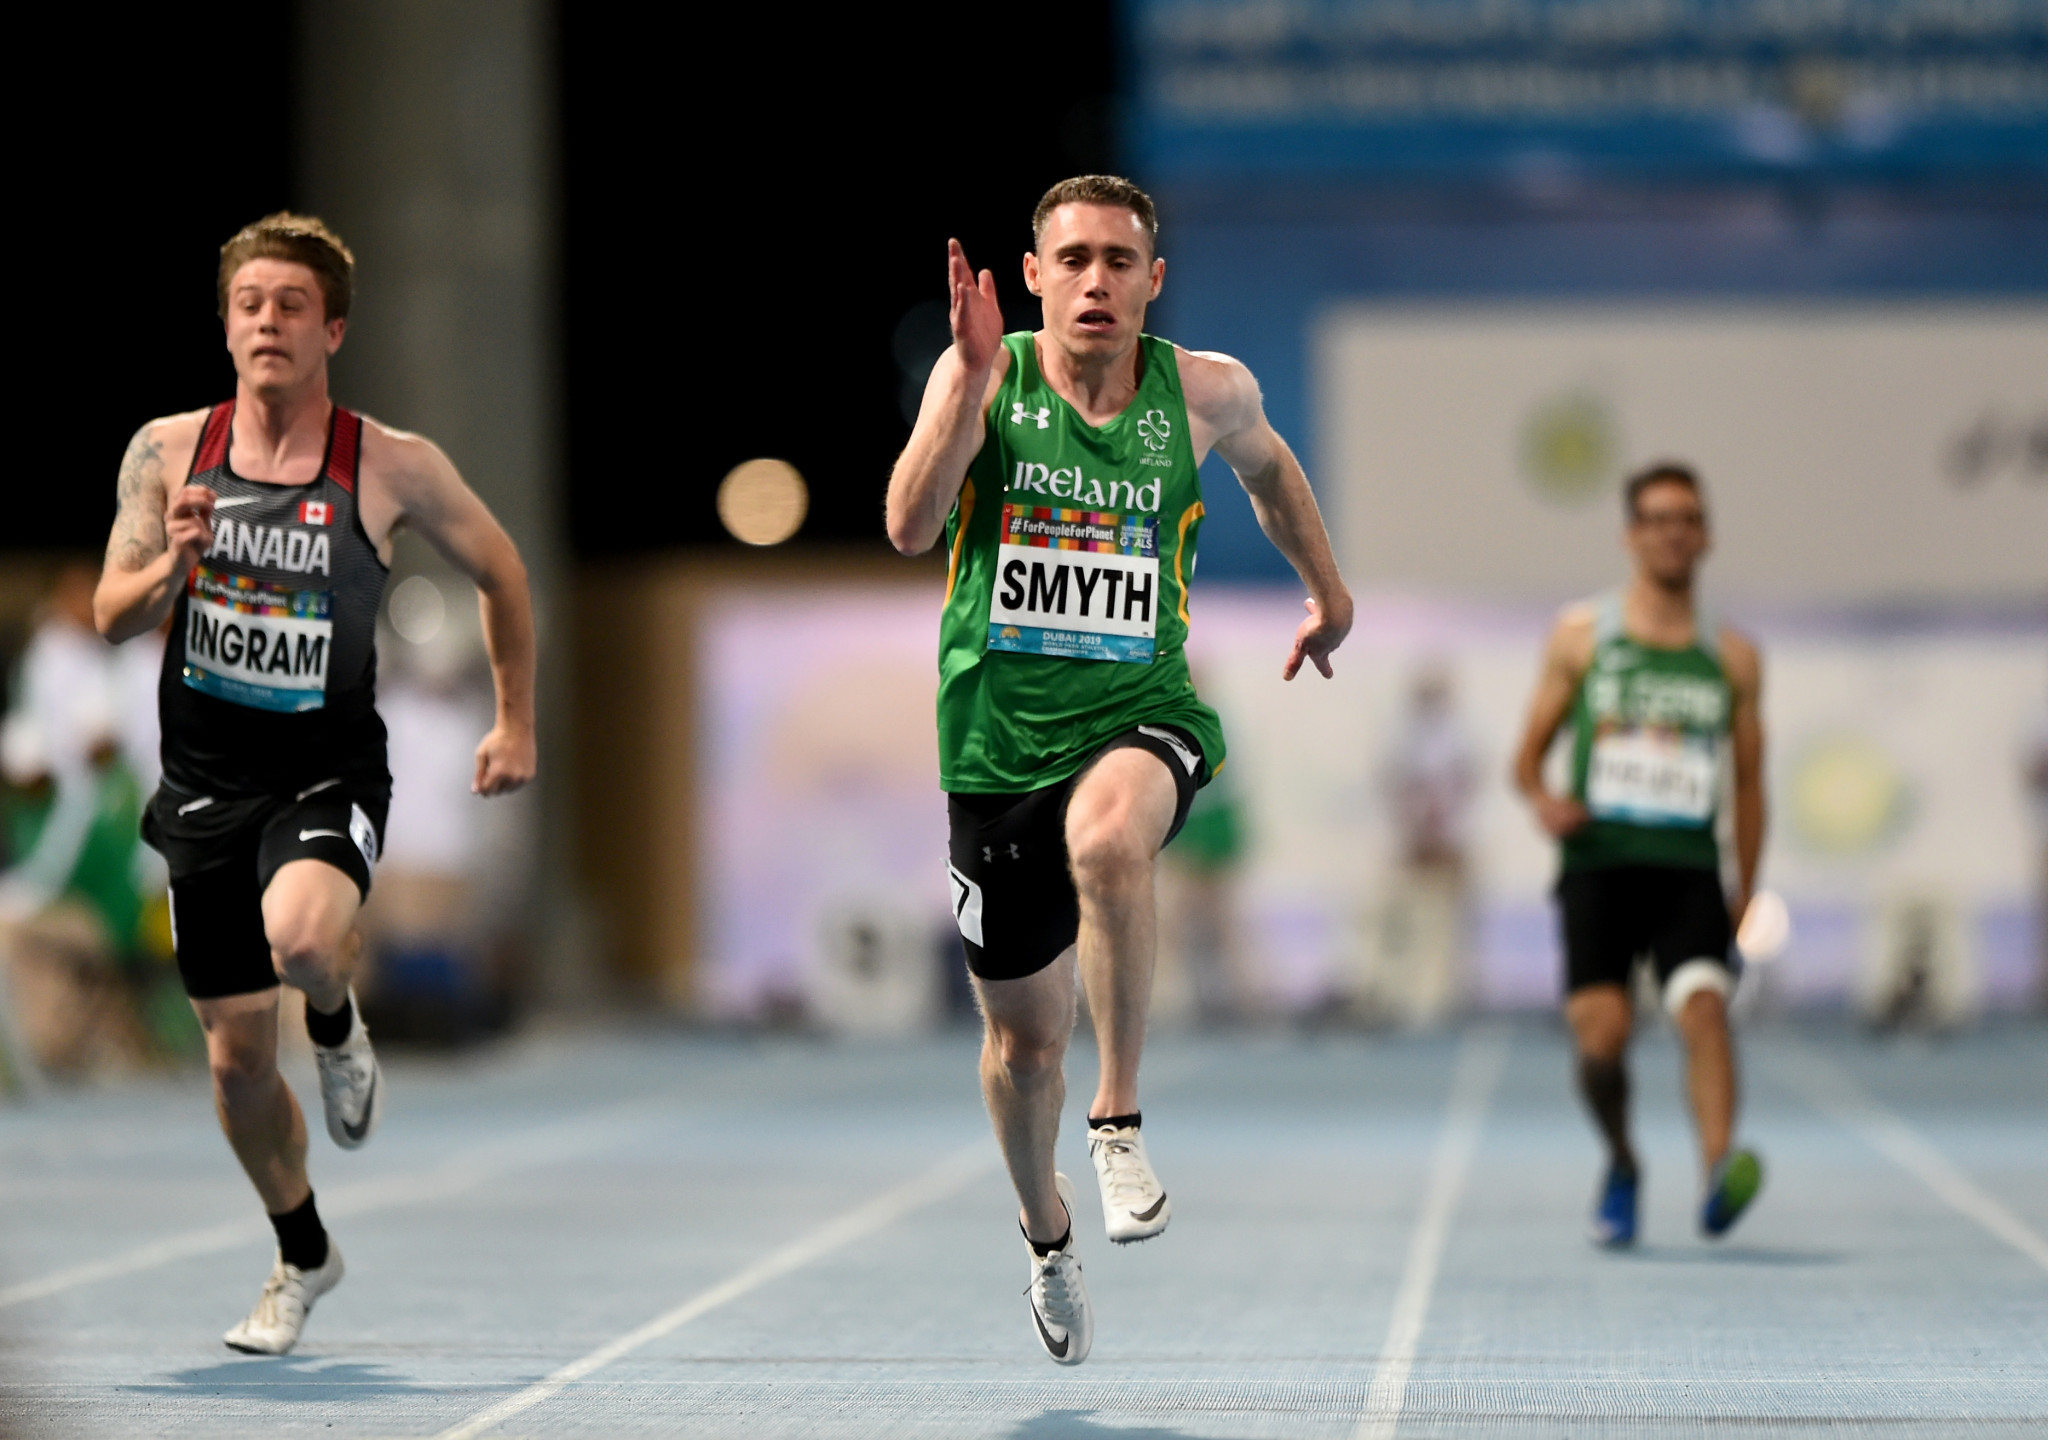 Irish sprint star Smyth admits to training challenges during lockdown